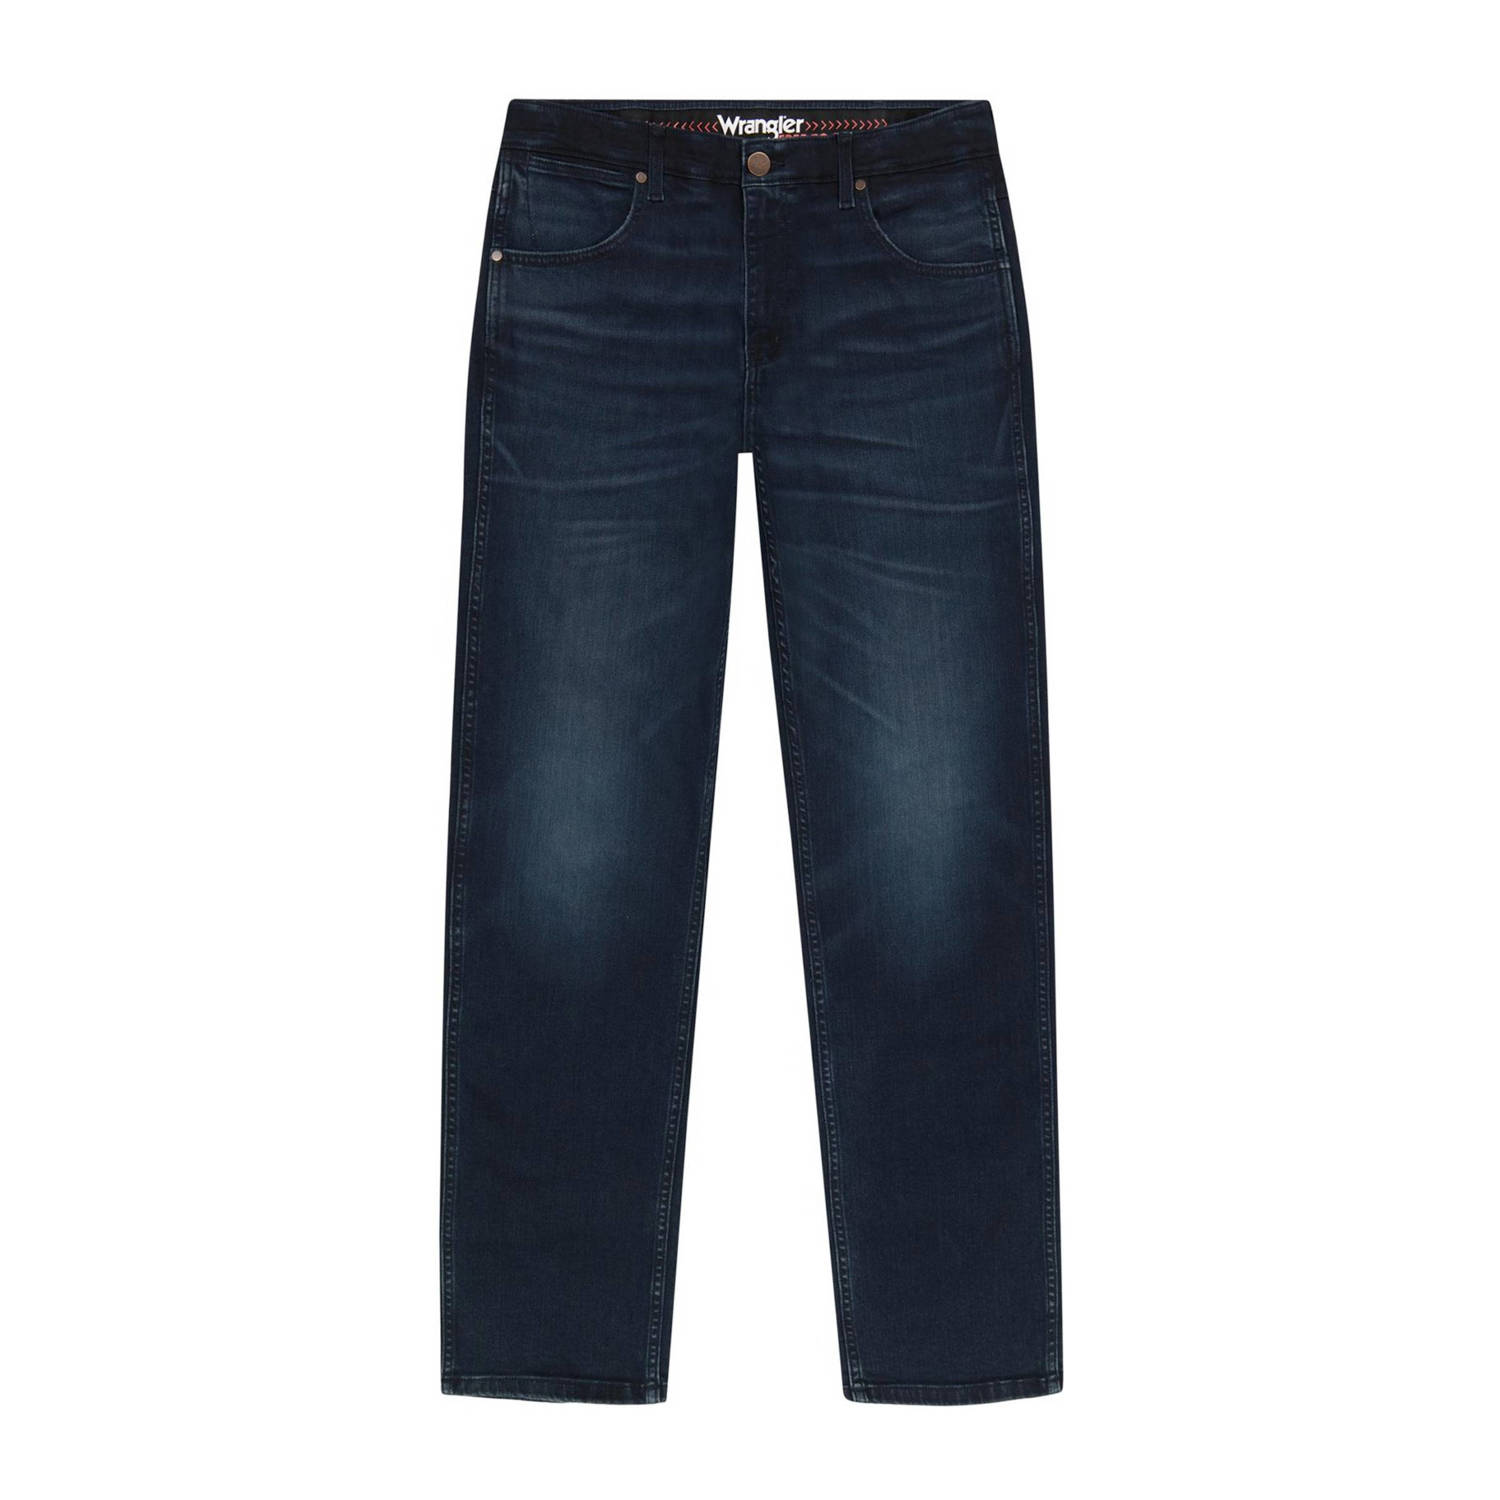 Wrangler 5-pocket jeans GREENSBORO FREE TO STRETCH